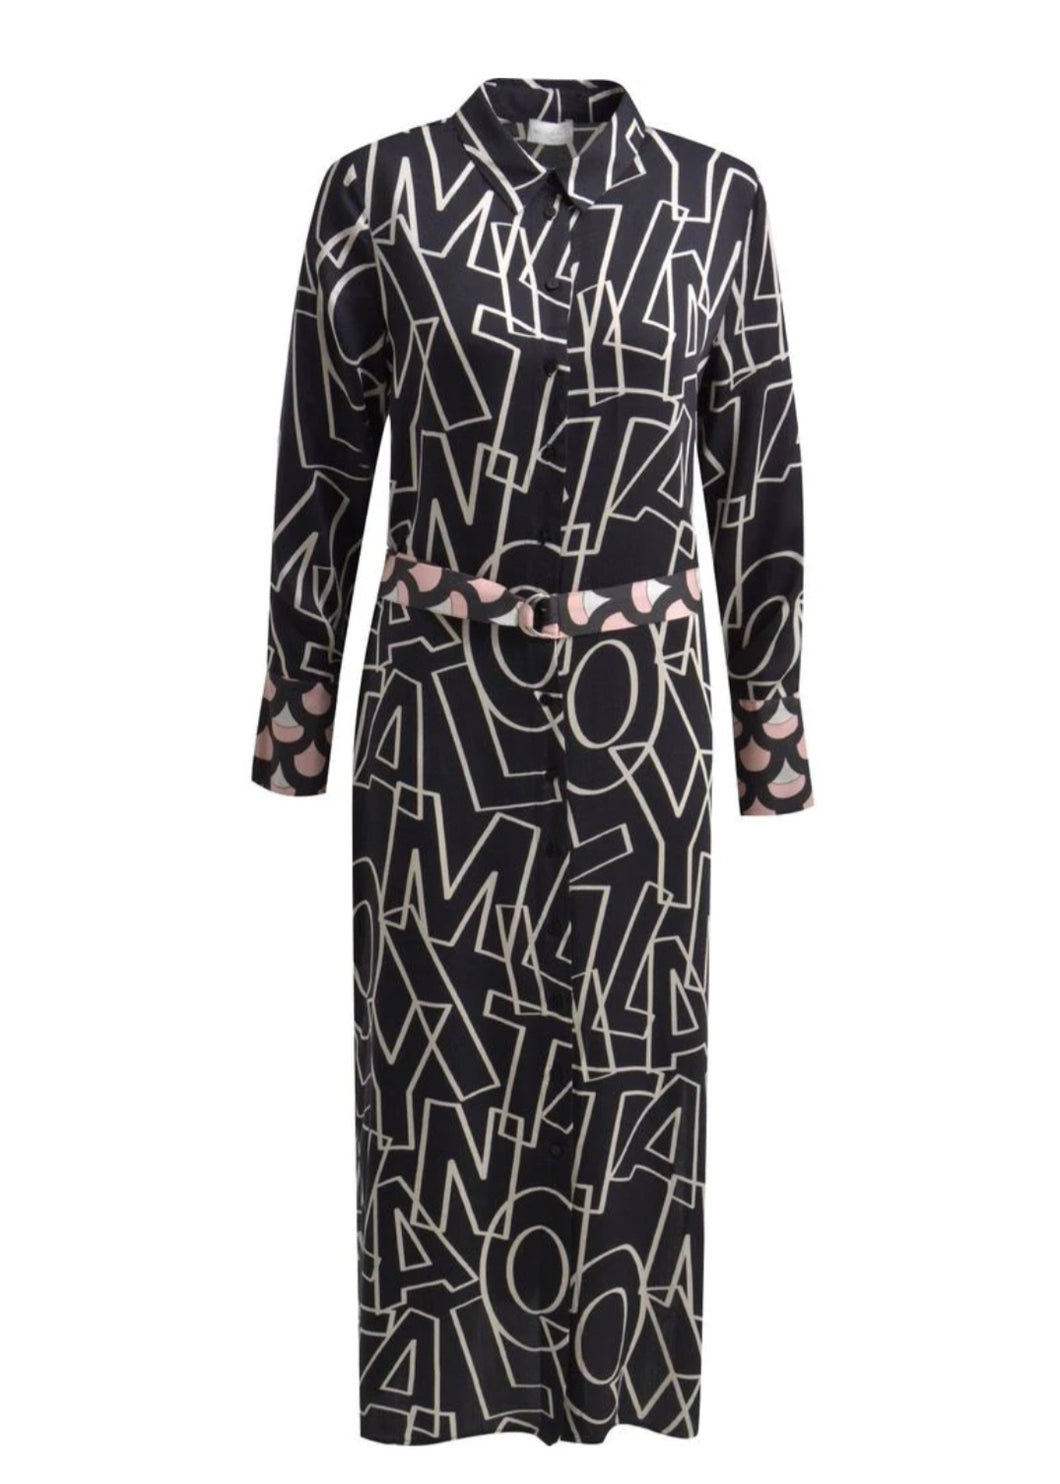 Milano - Monotone printed dress